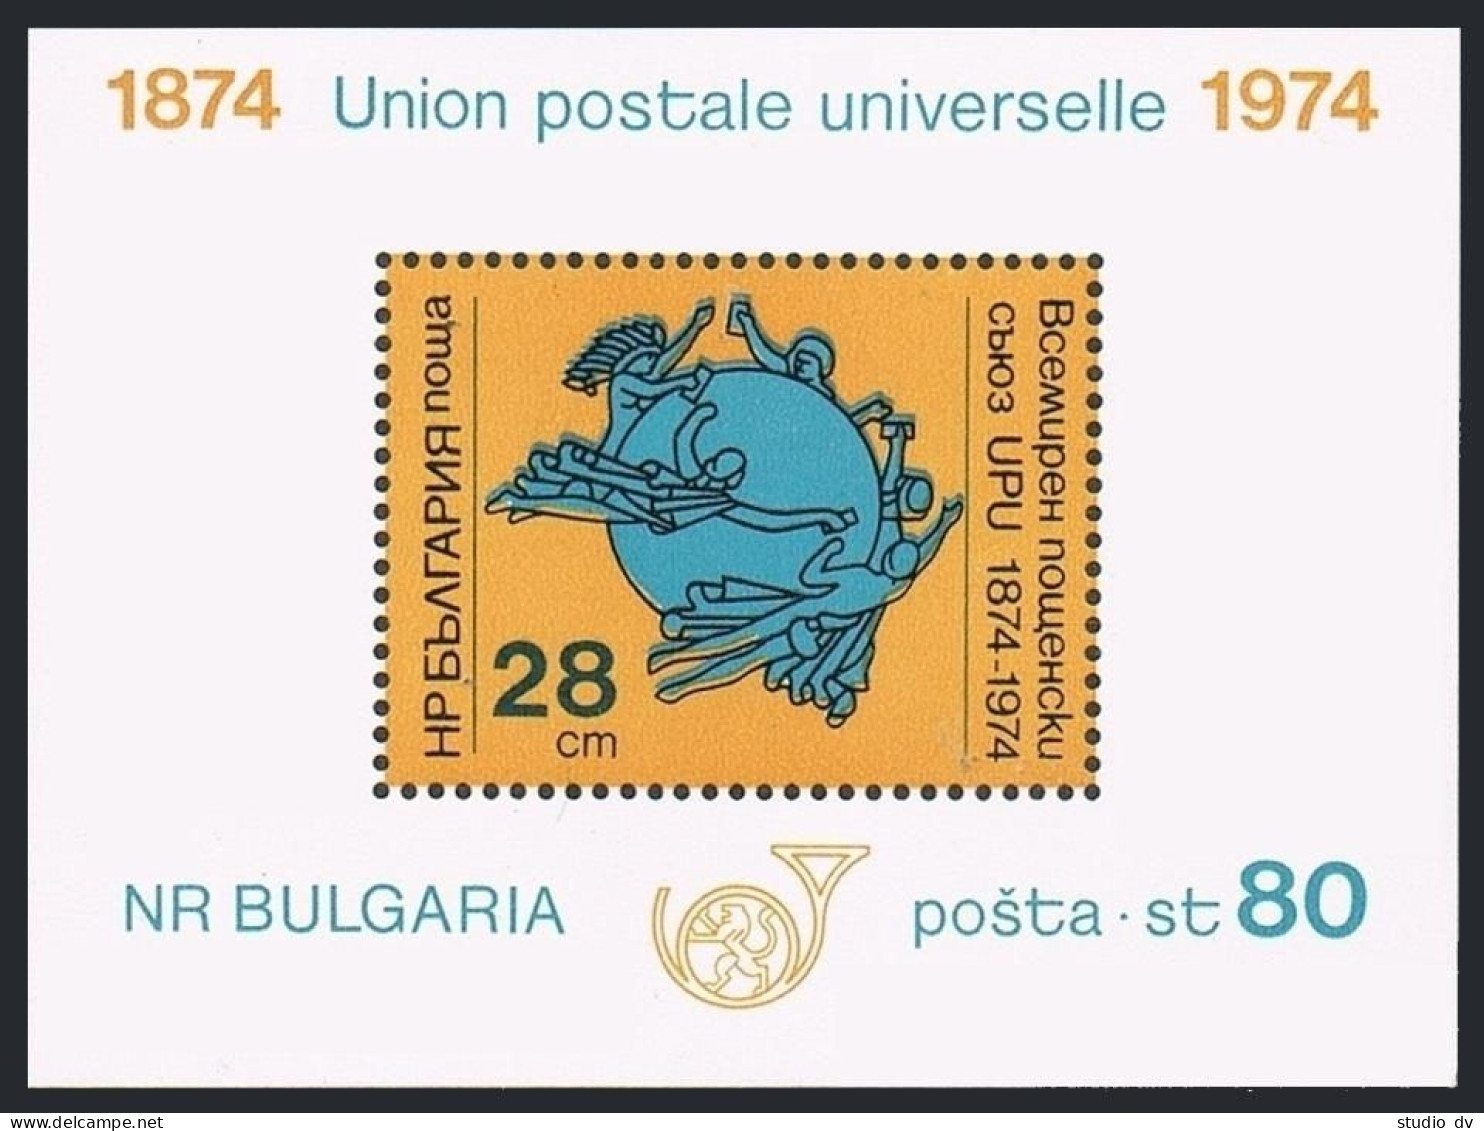 Bulgaria 2193-2194,2195, MNH. Mi 2362-2363,Bl.52. UPU-100:Post Rider,Mail Coach - Ongebruikt